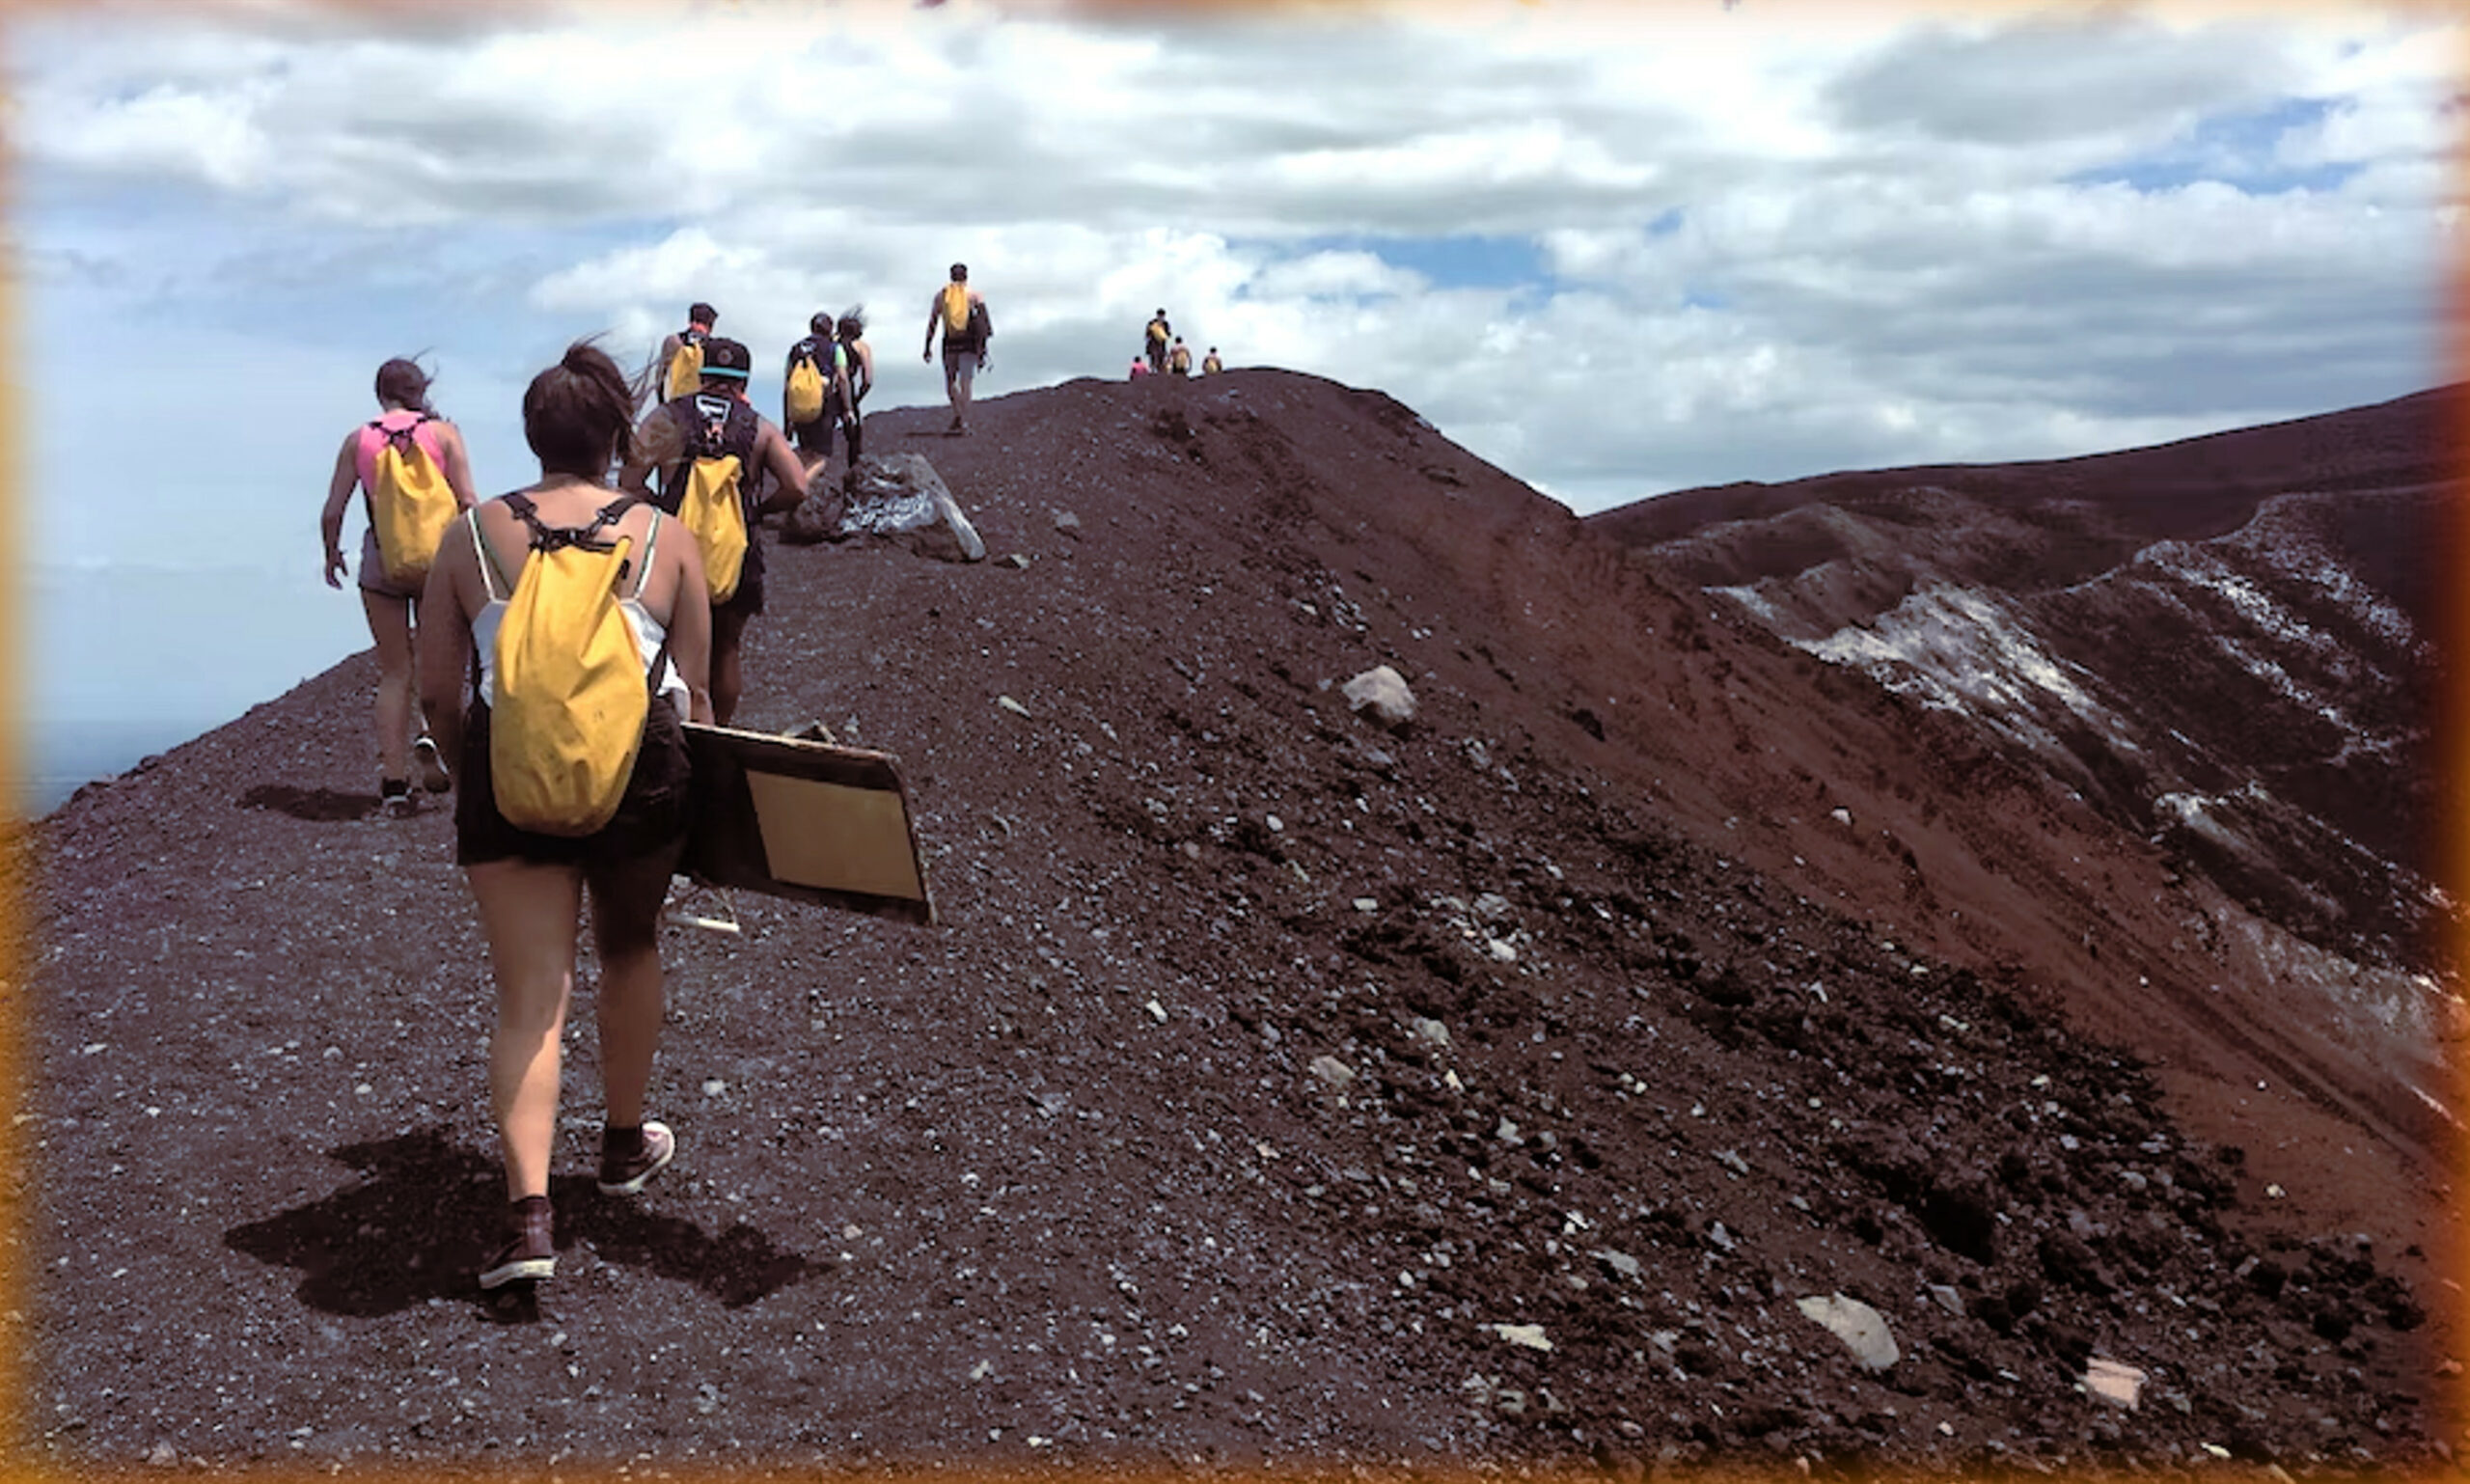 Grupo de Volcano Boarders escalando o Cerro Negro com pranchas